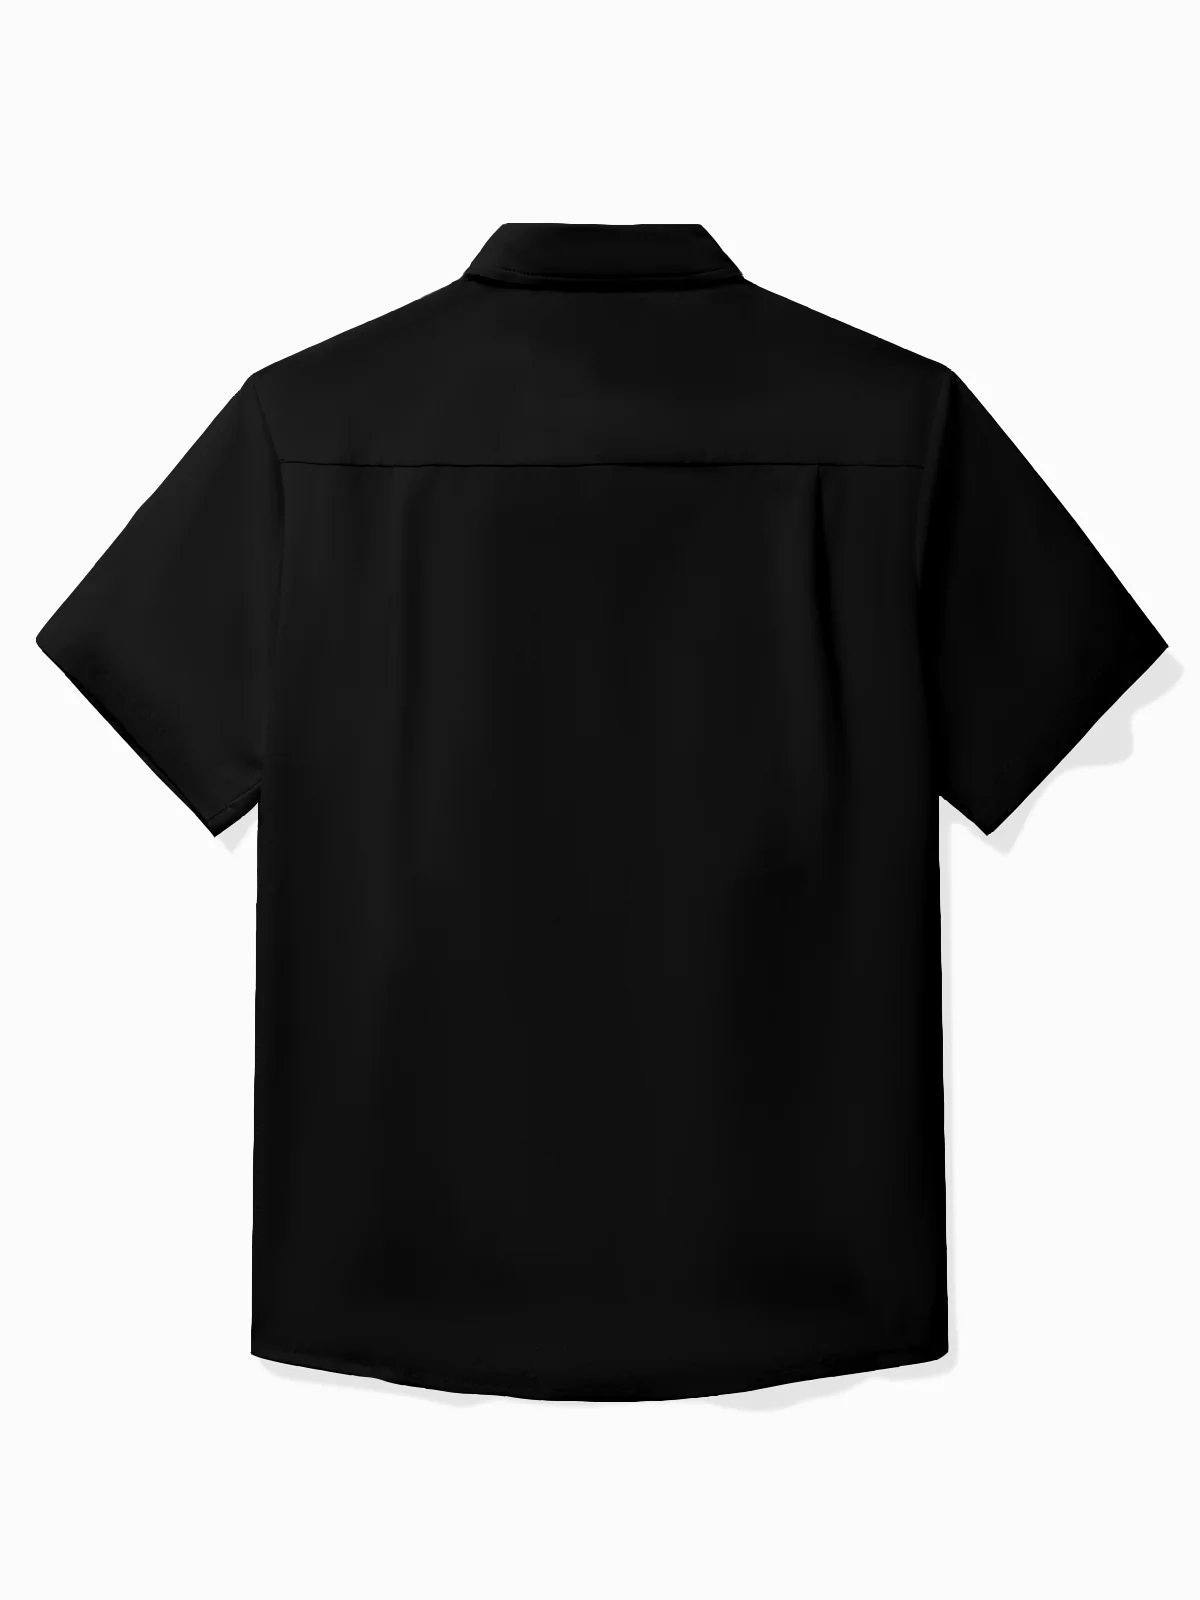 Royaura® Vintage Bowling Tattoo Designs Printed Chest Pocket Shirt Plus Size Men's Shirt